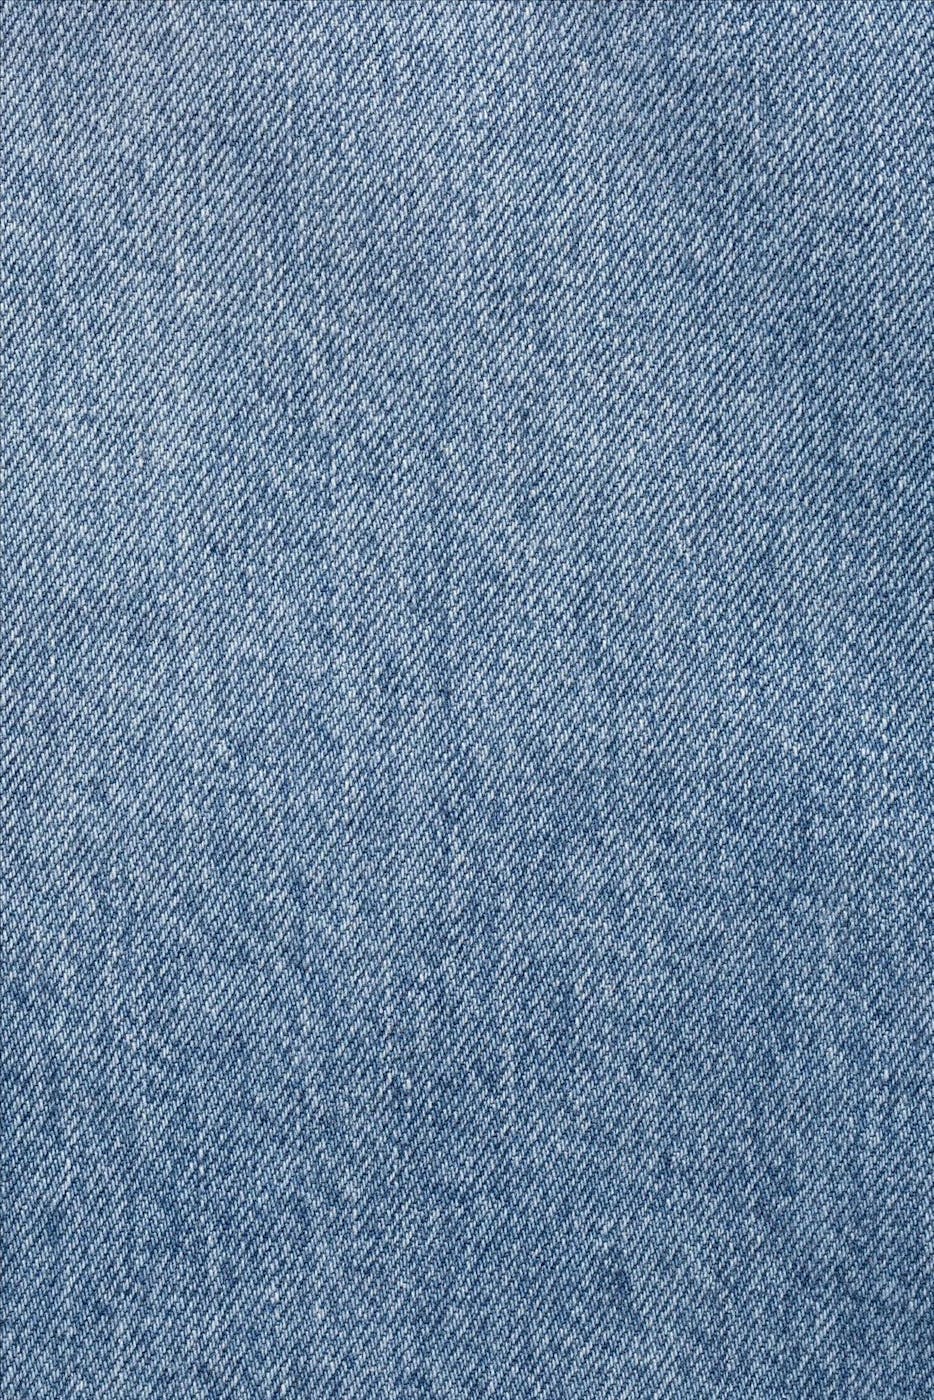 Nudie Jeans Co. - Lichtblauwe Steady Eddie jeans